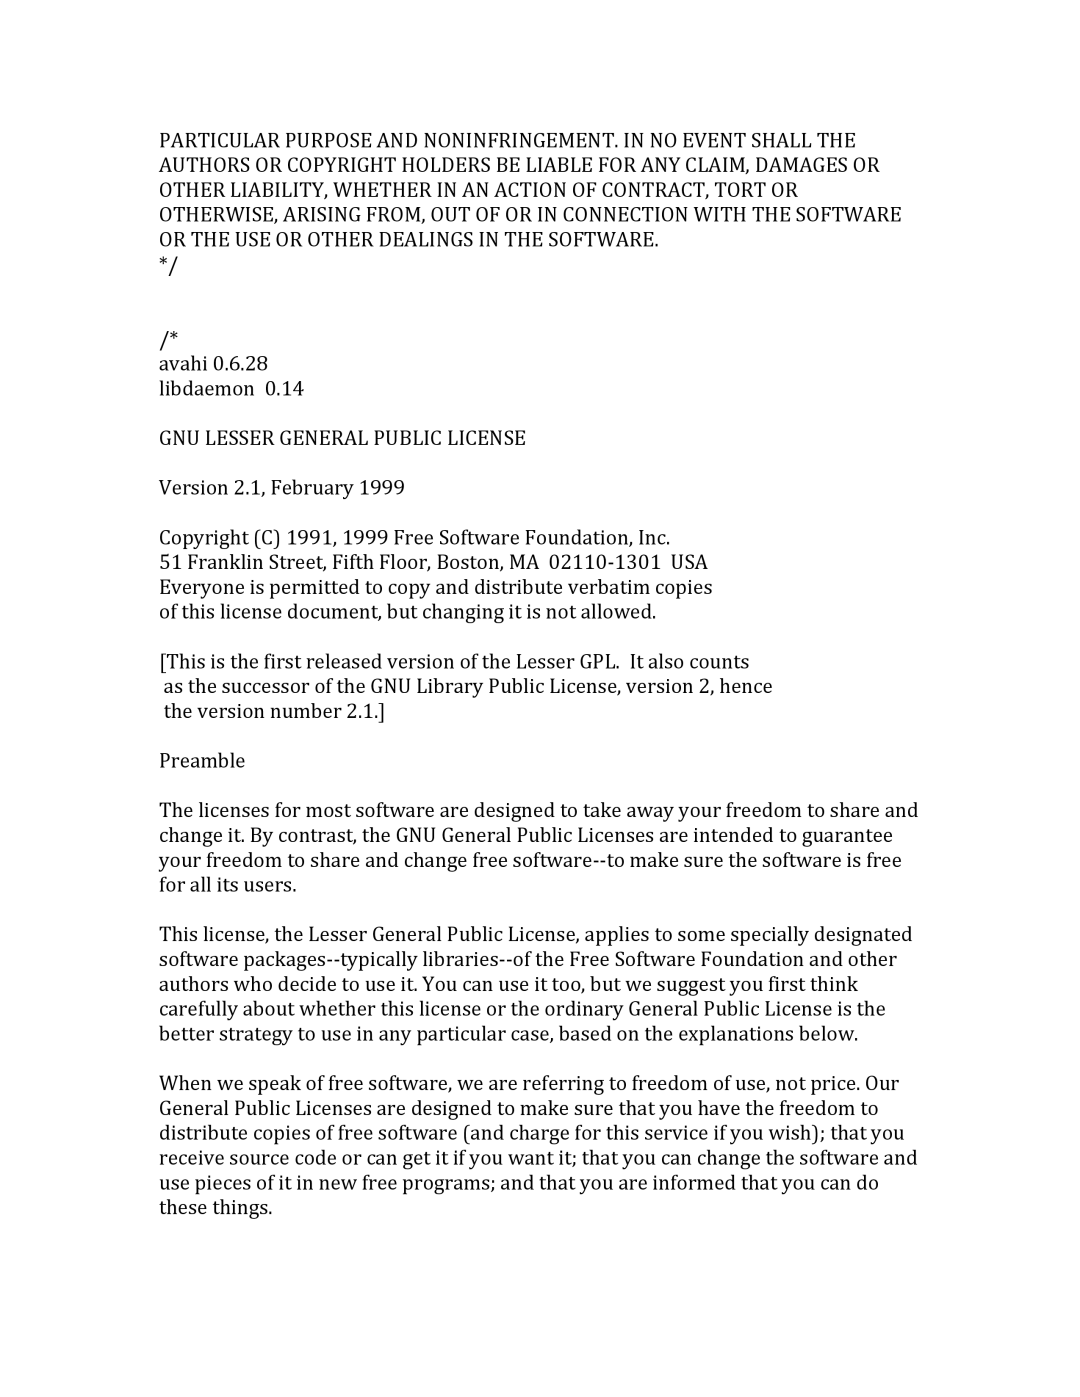 Philips M100D manual avahi 0.6.28 libdaemon, Gnu Lesser General Public License, Version 2.1, February, Preamble 